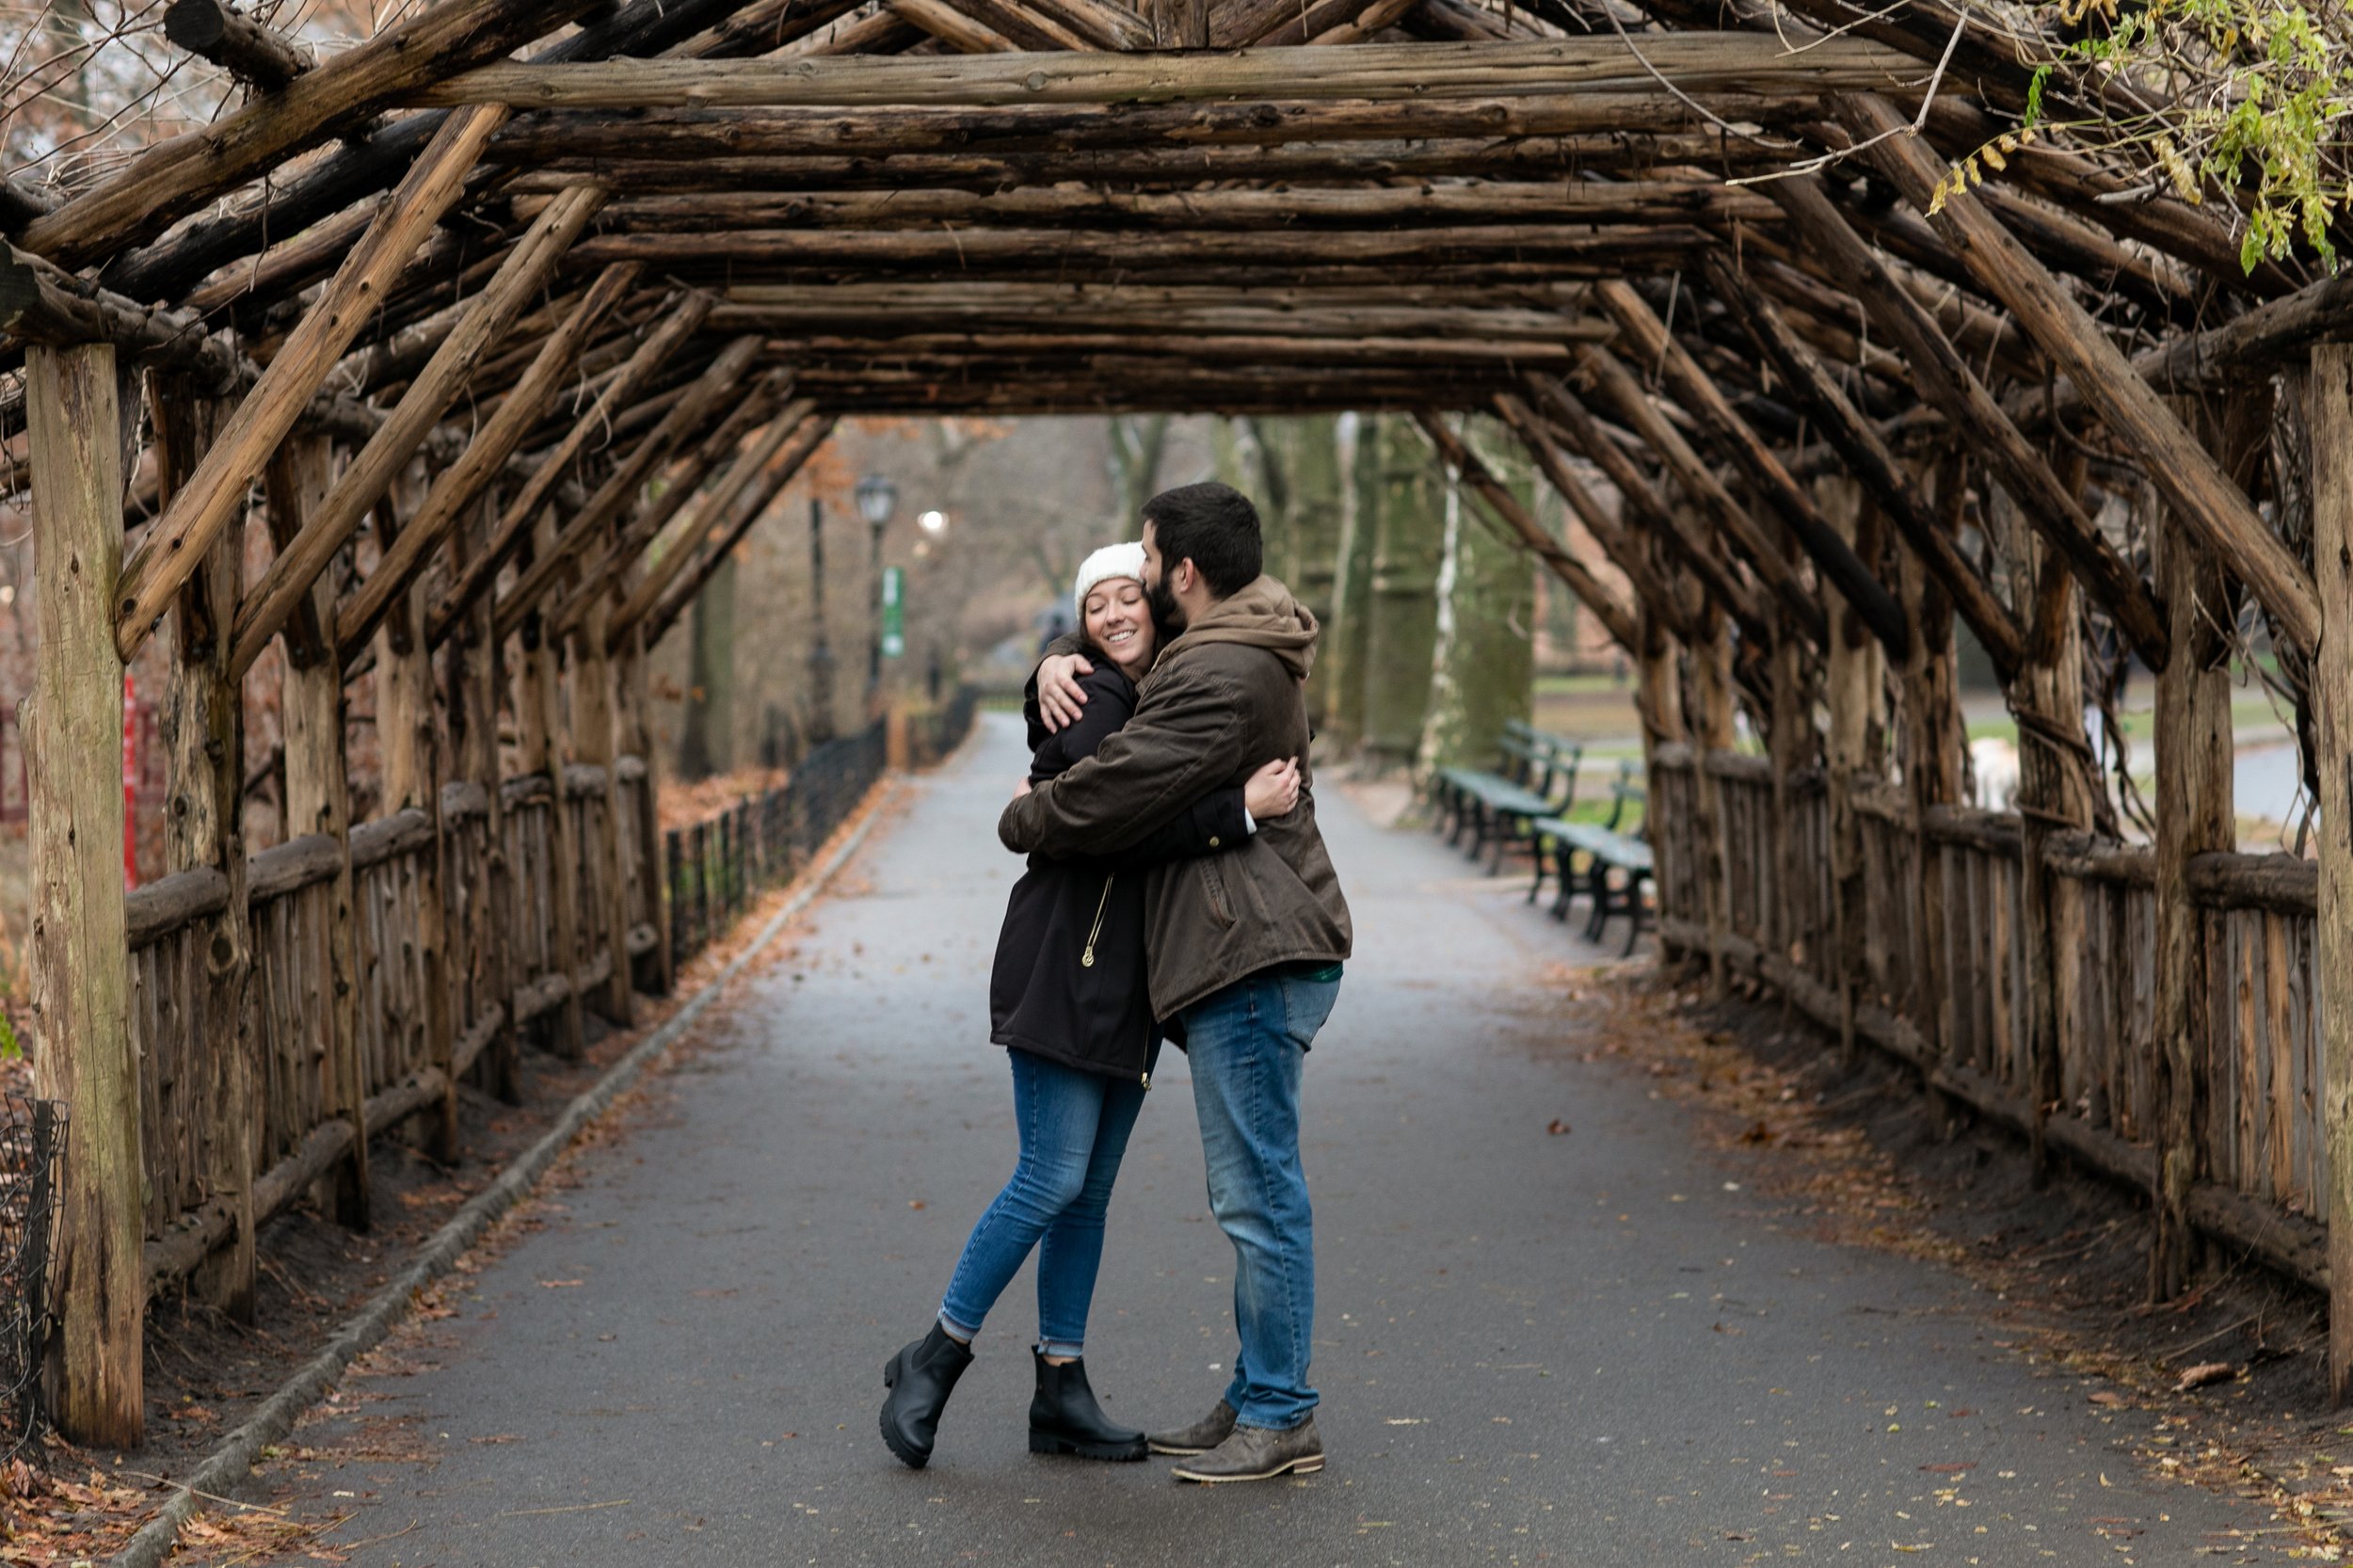 Central Park Proposal Photographer NYC _ Jonathan Heisler _12.17.2021 _ 0006.jpg